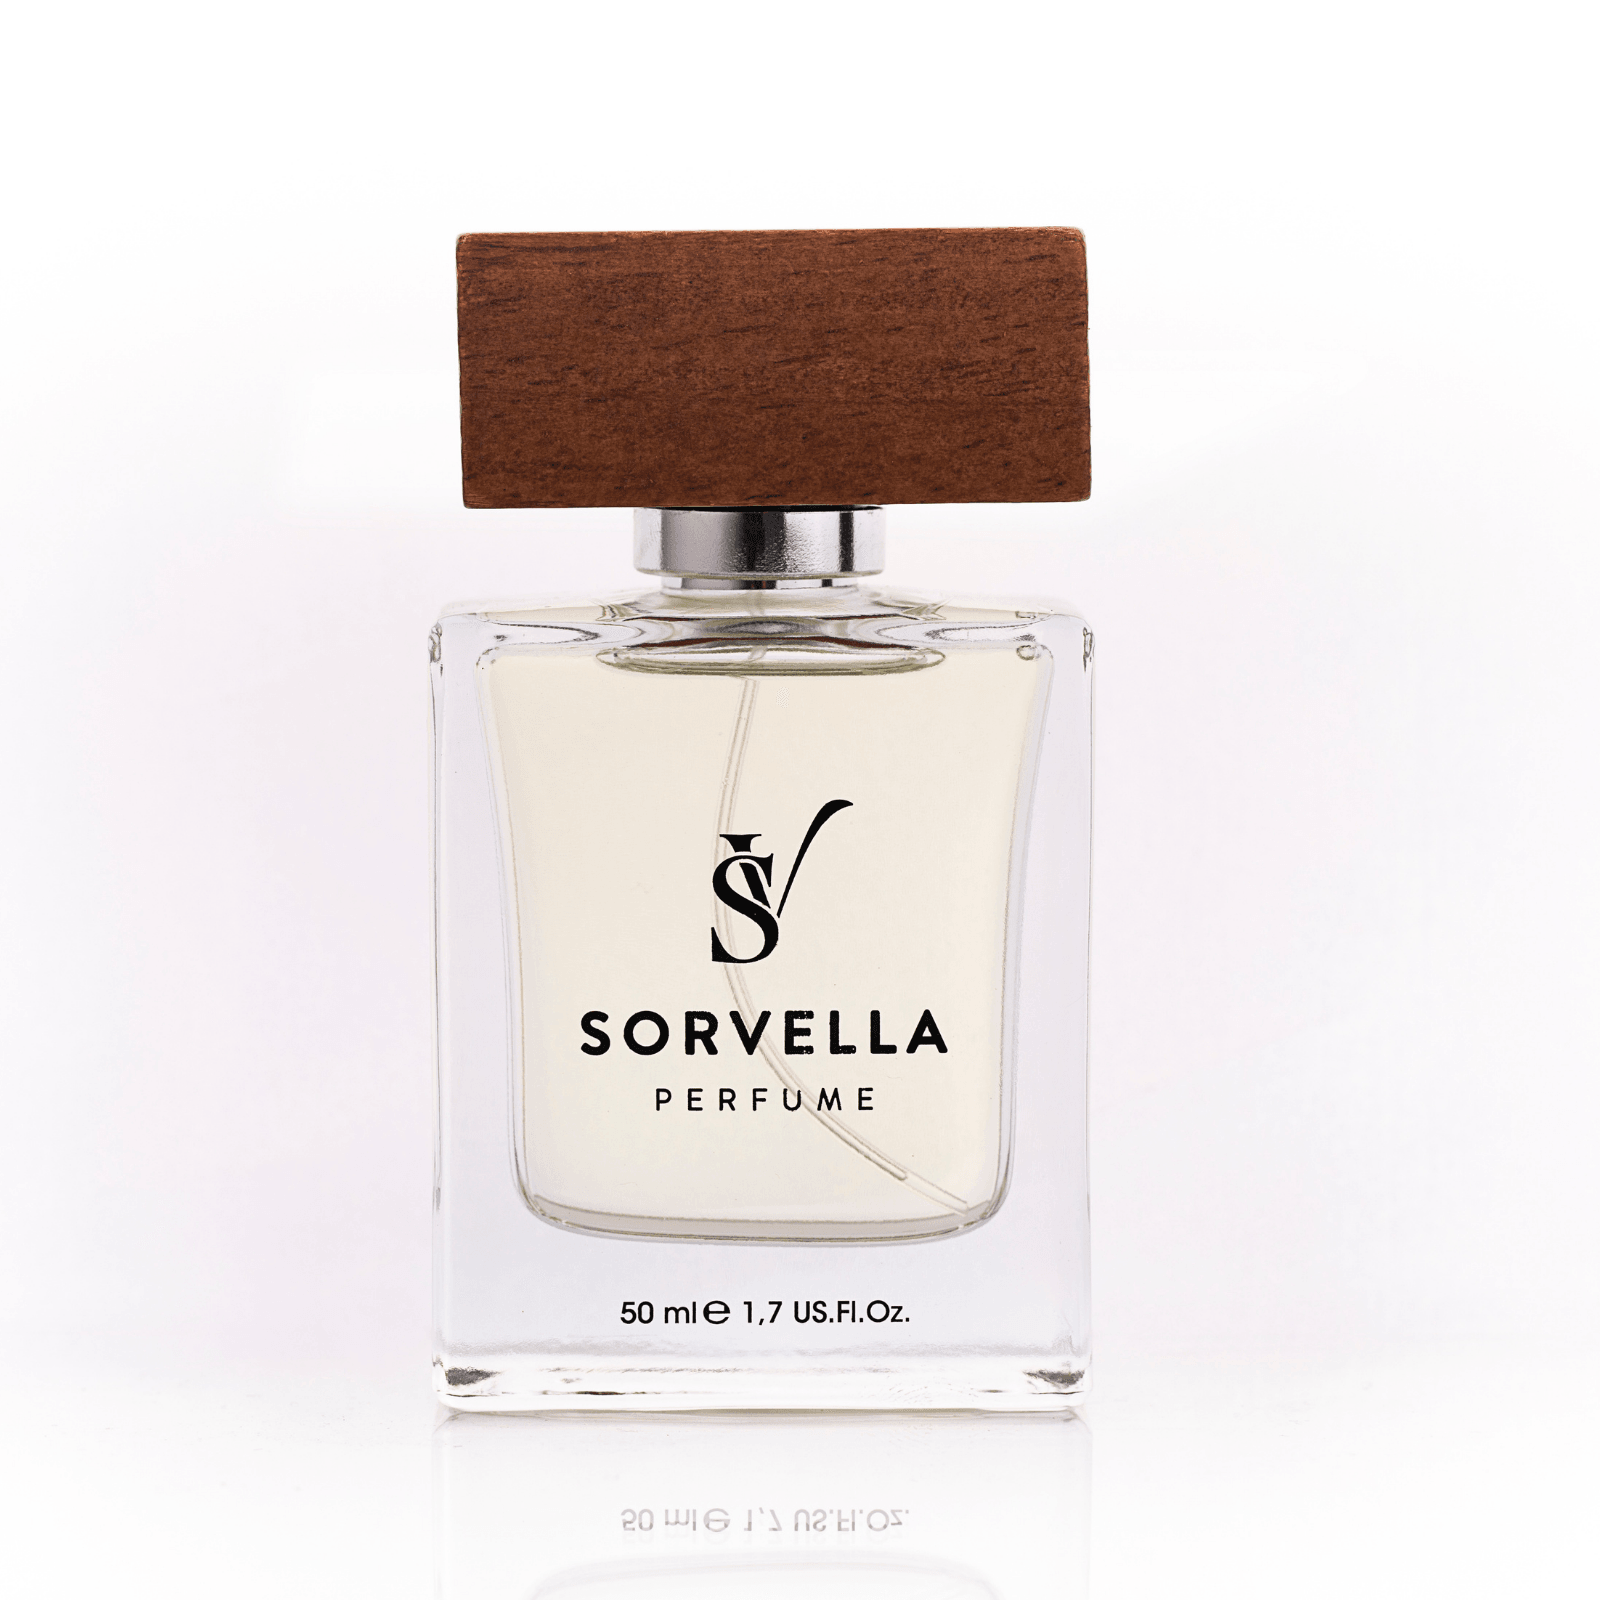 S34 - Allure Pour Homme 50ml Świeże Perfumy Męskie Sorvella - sorvellaperfume.pl